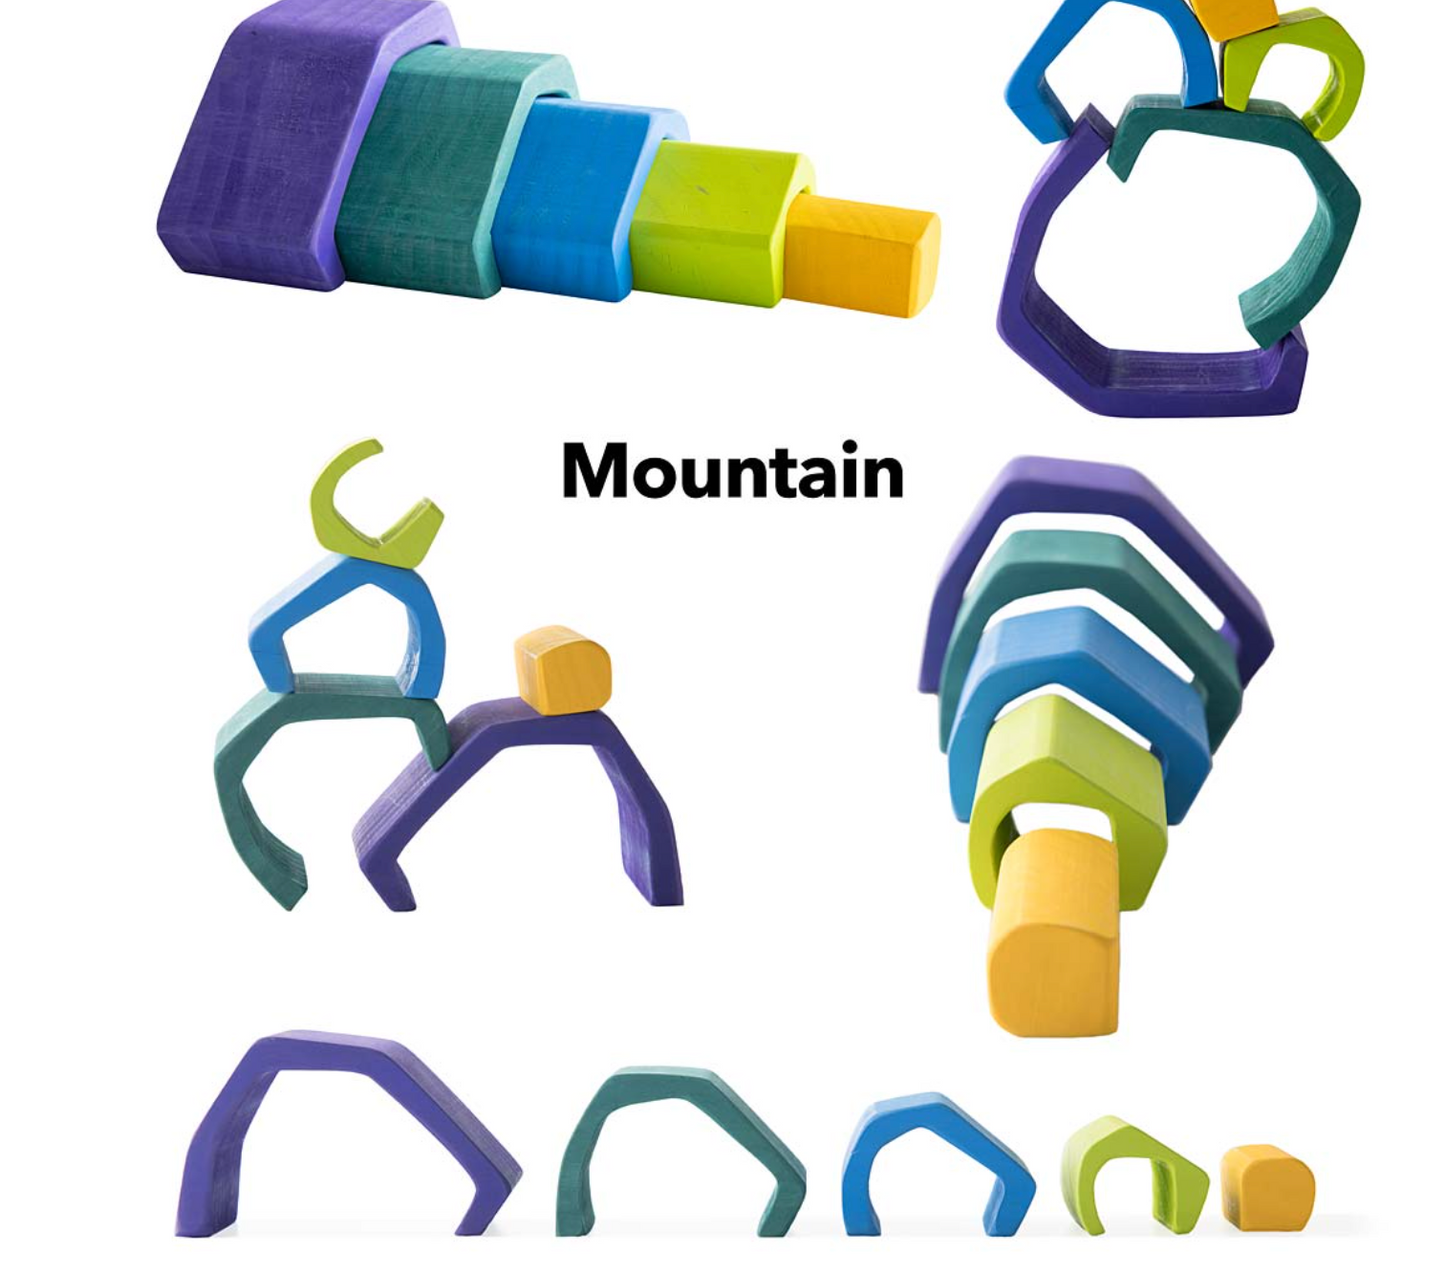 5-Piece Wooden Stackable Nesting Blocks Play Set - Mountain